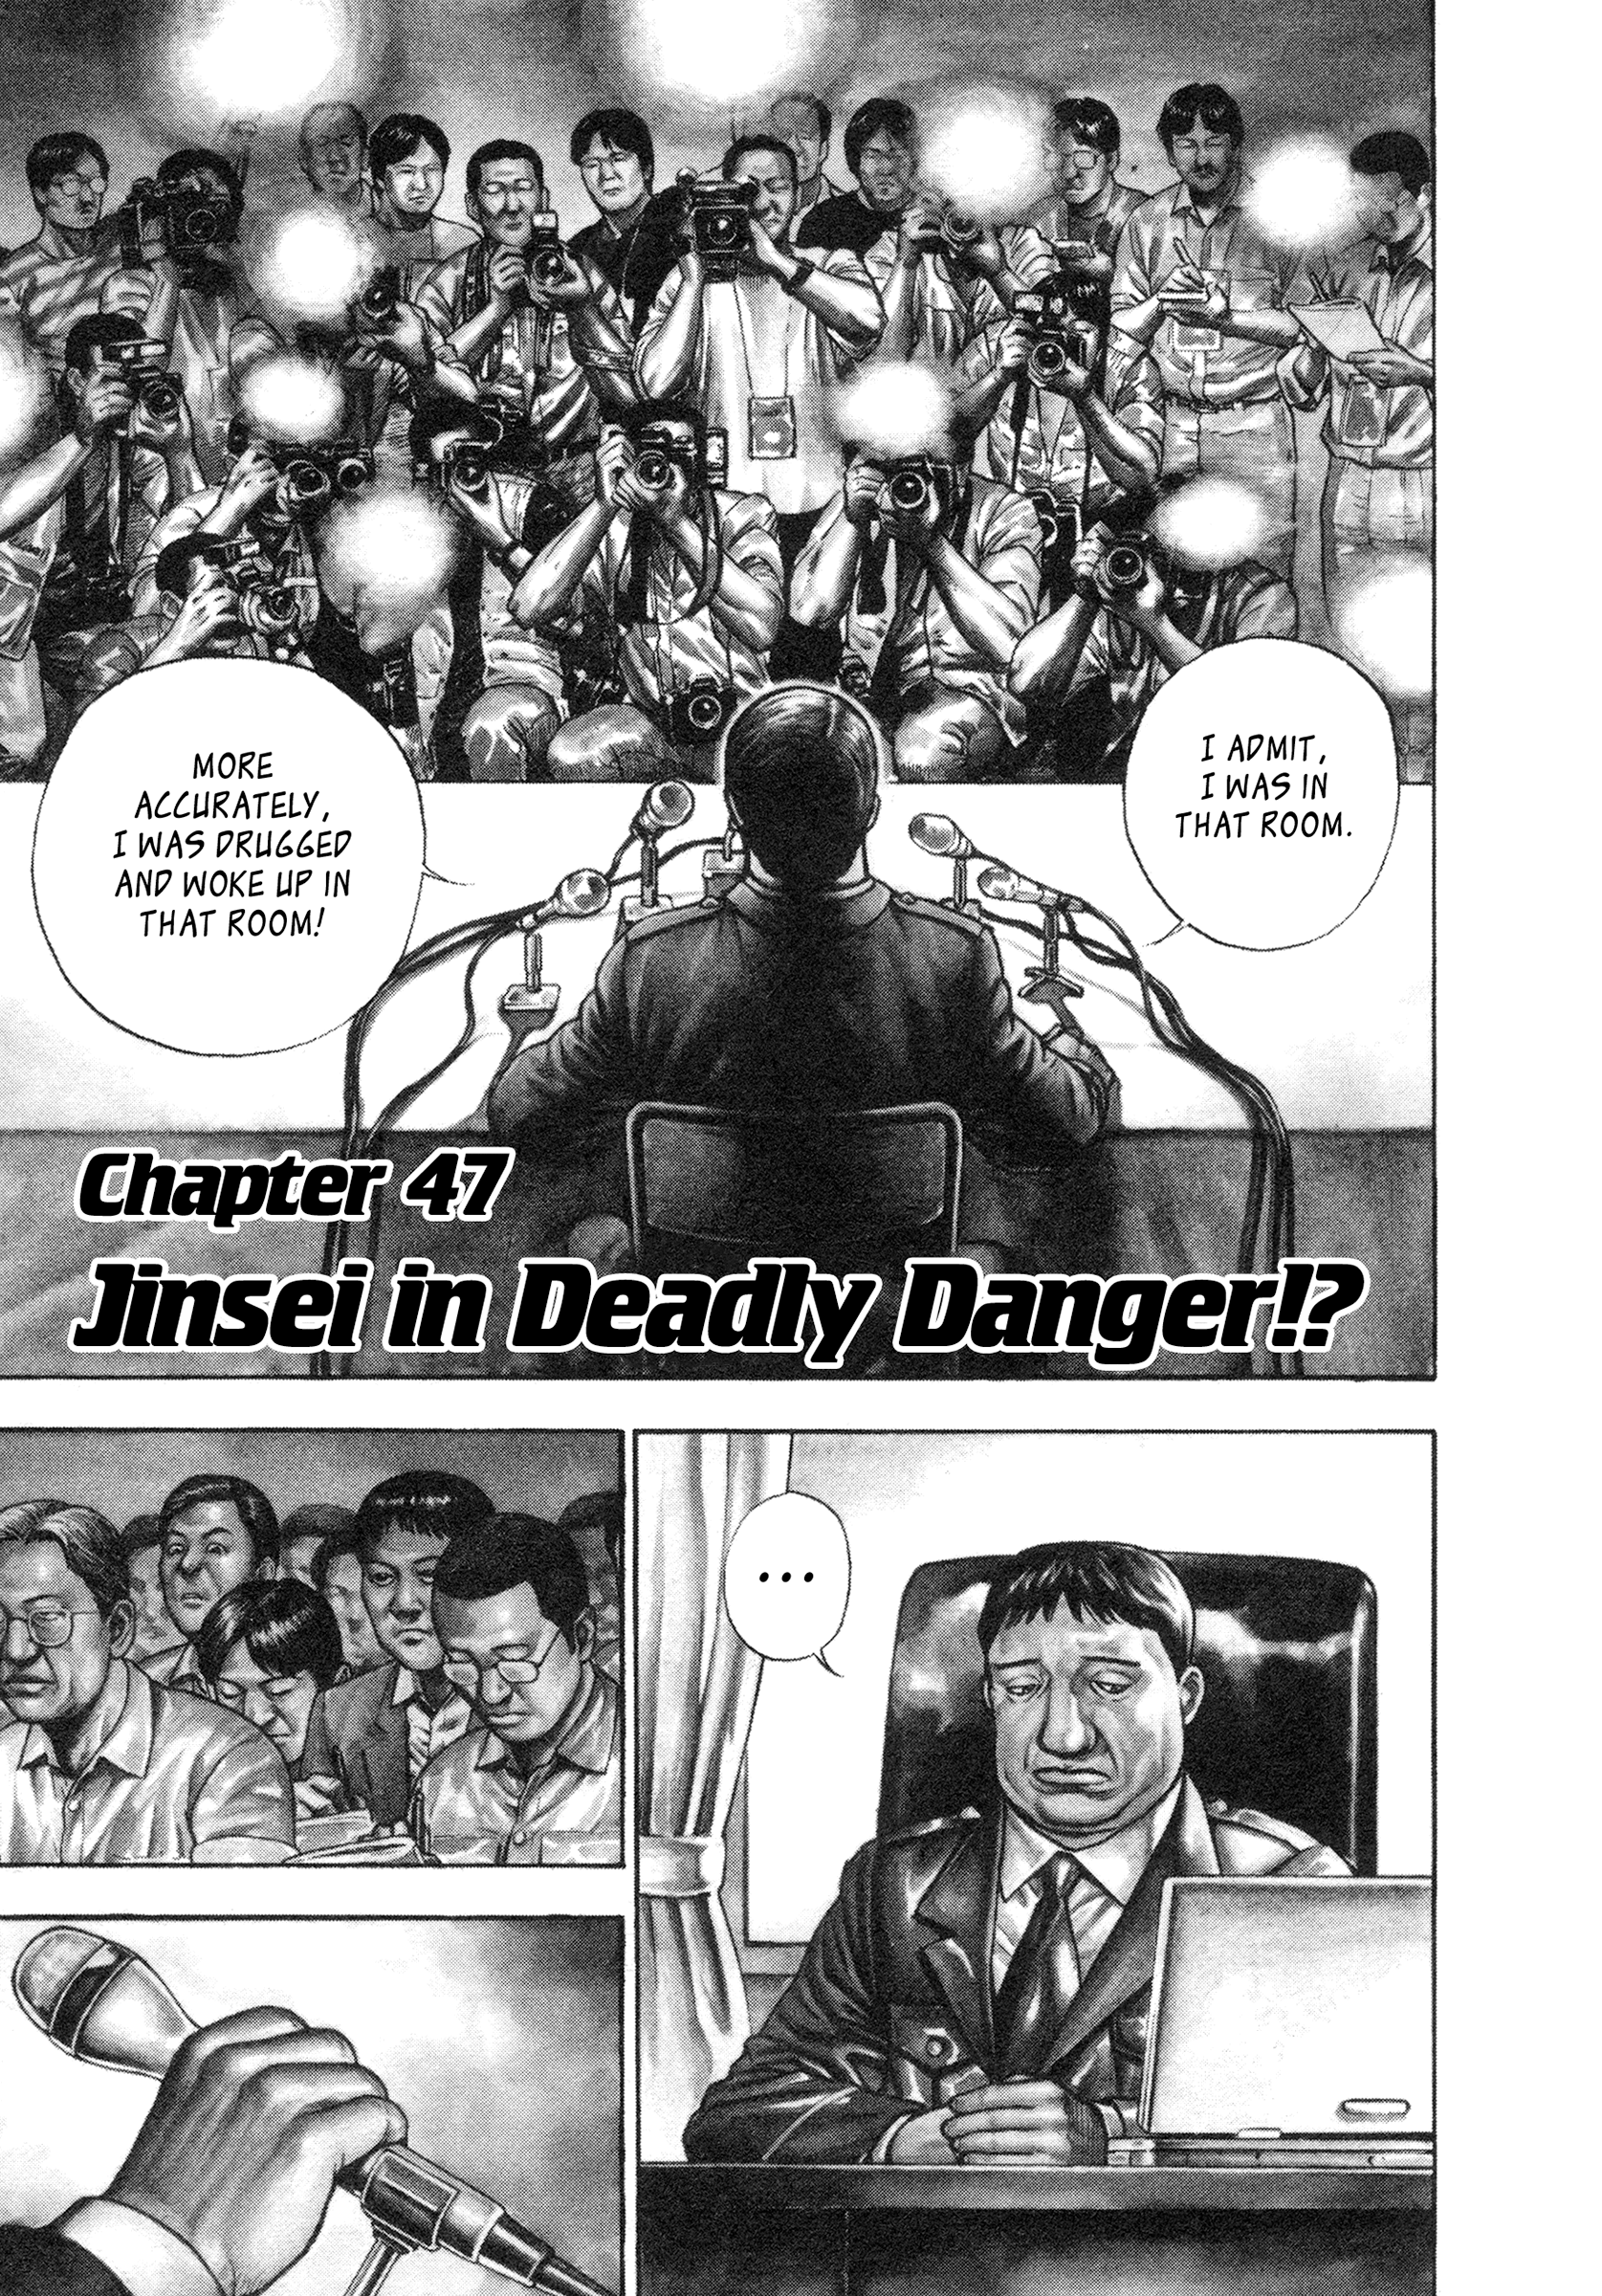 Kizu Darake No Jinsei Vol.7 Chapter 47: Jinsei In Deadly Danger!? - Picture 1